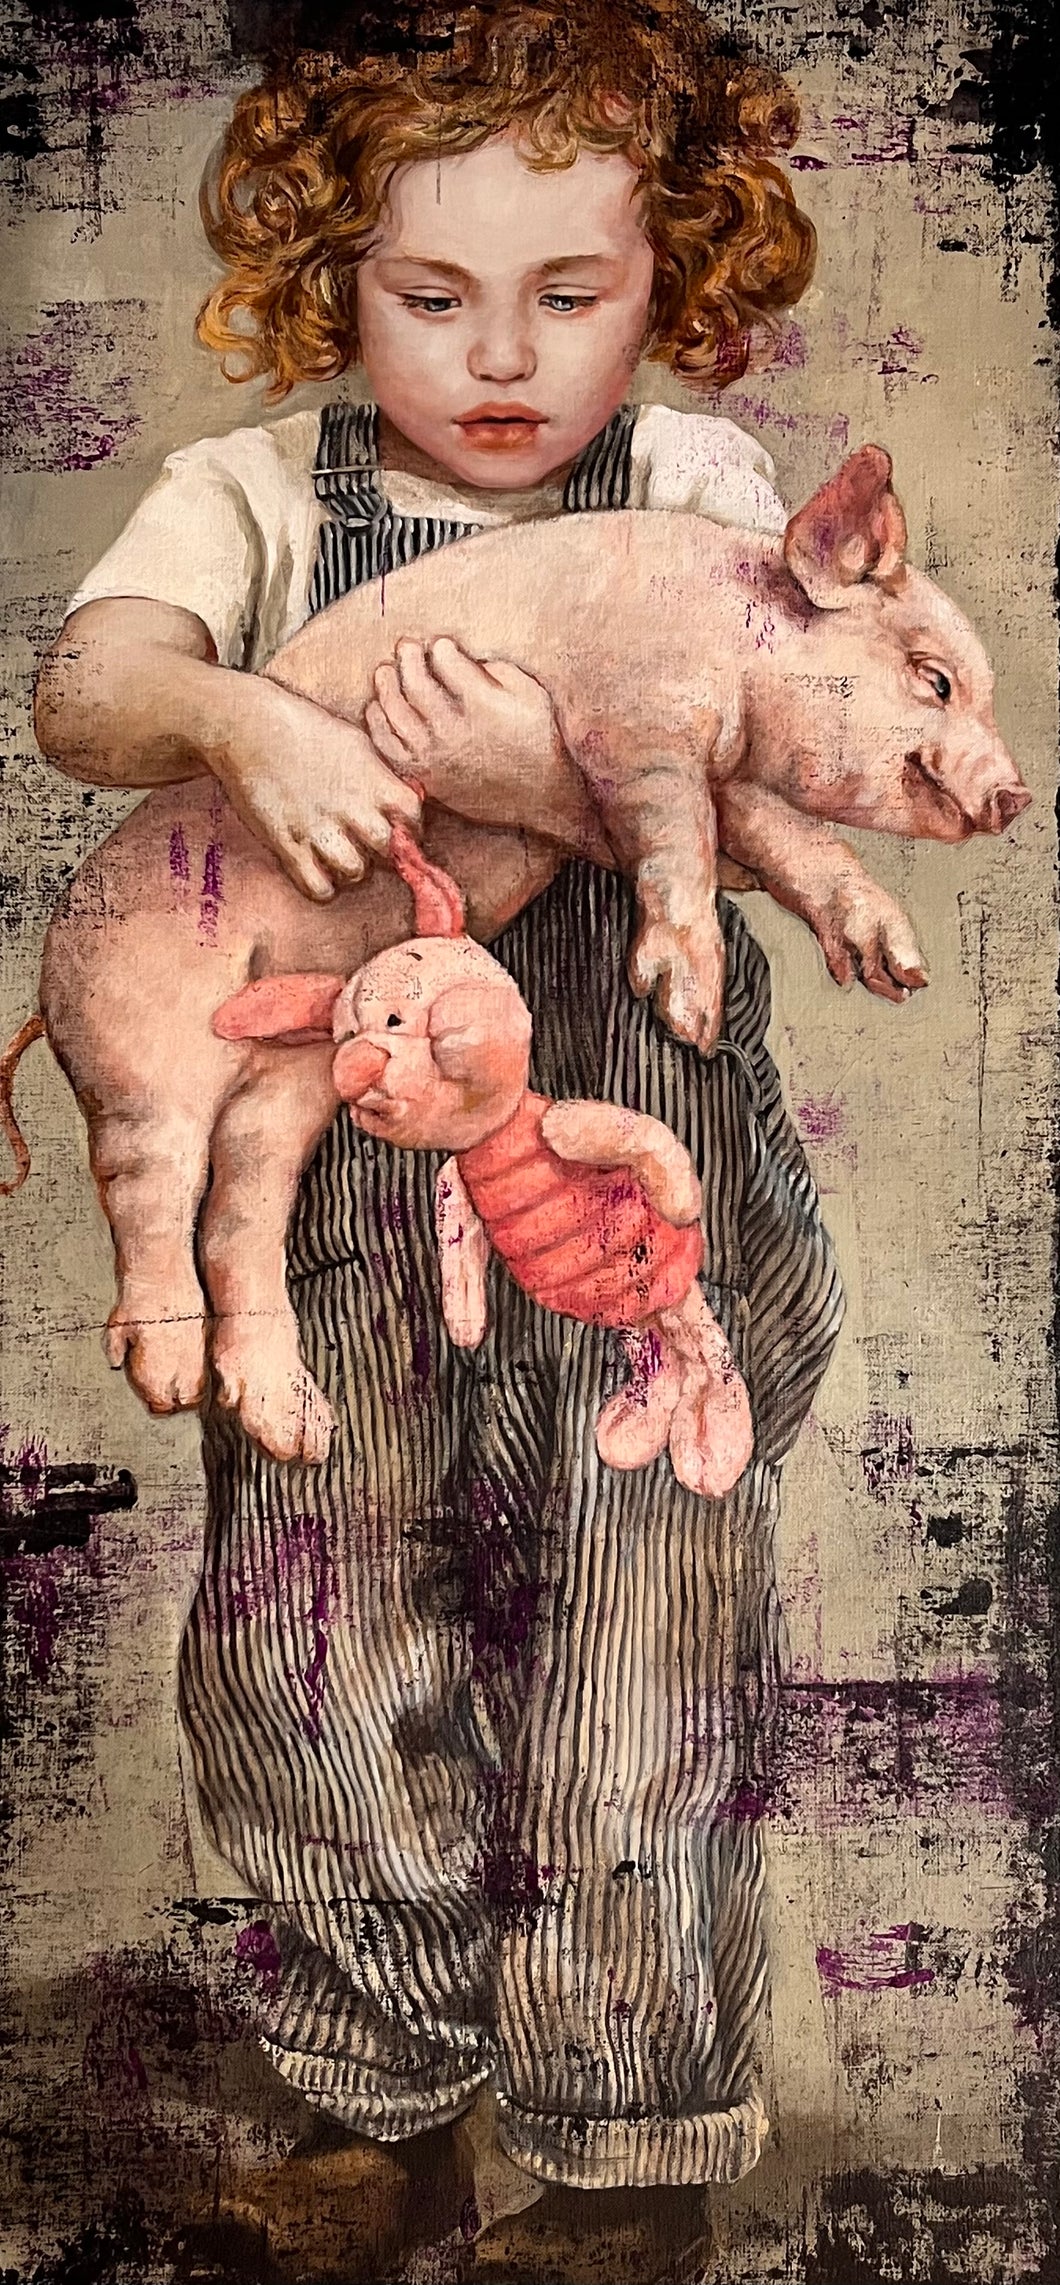 29. Three Little Pigs